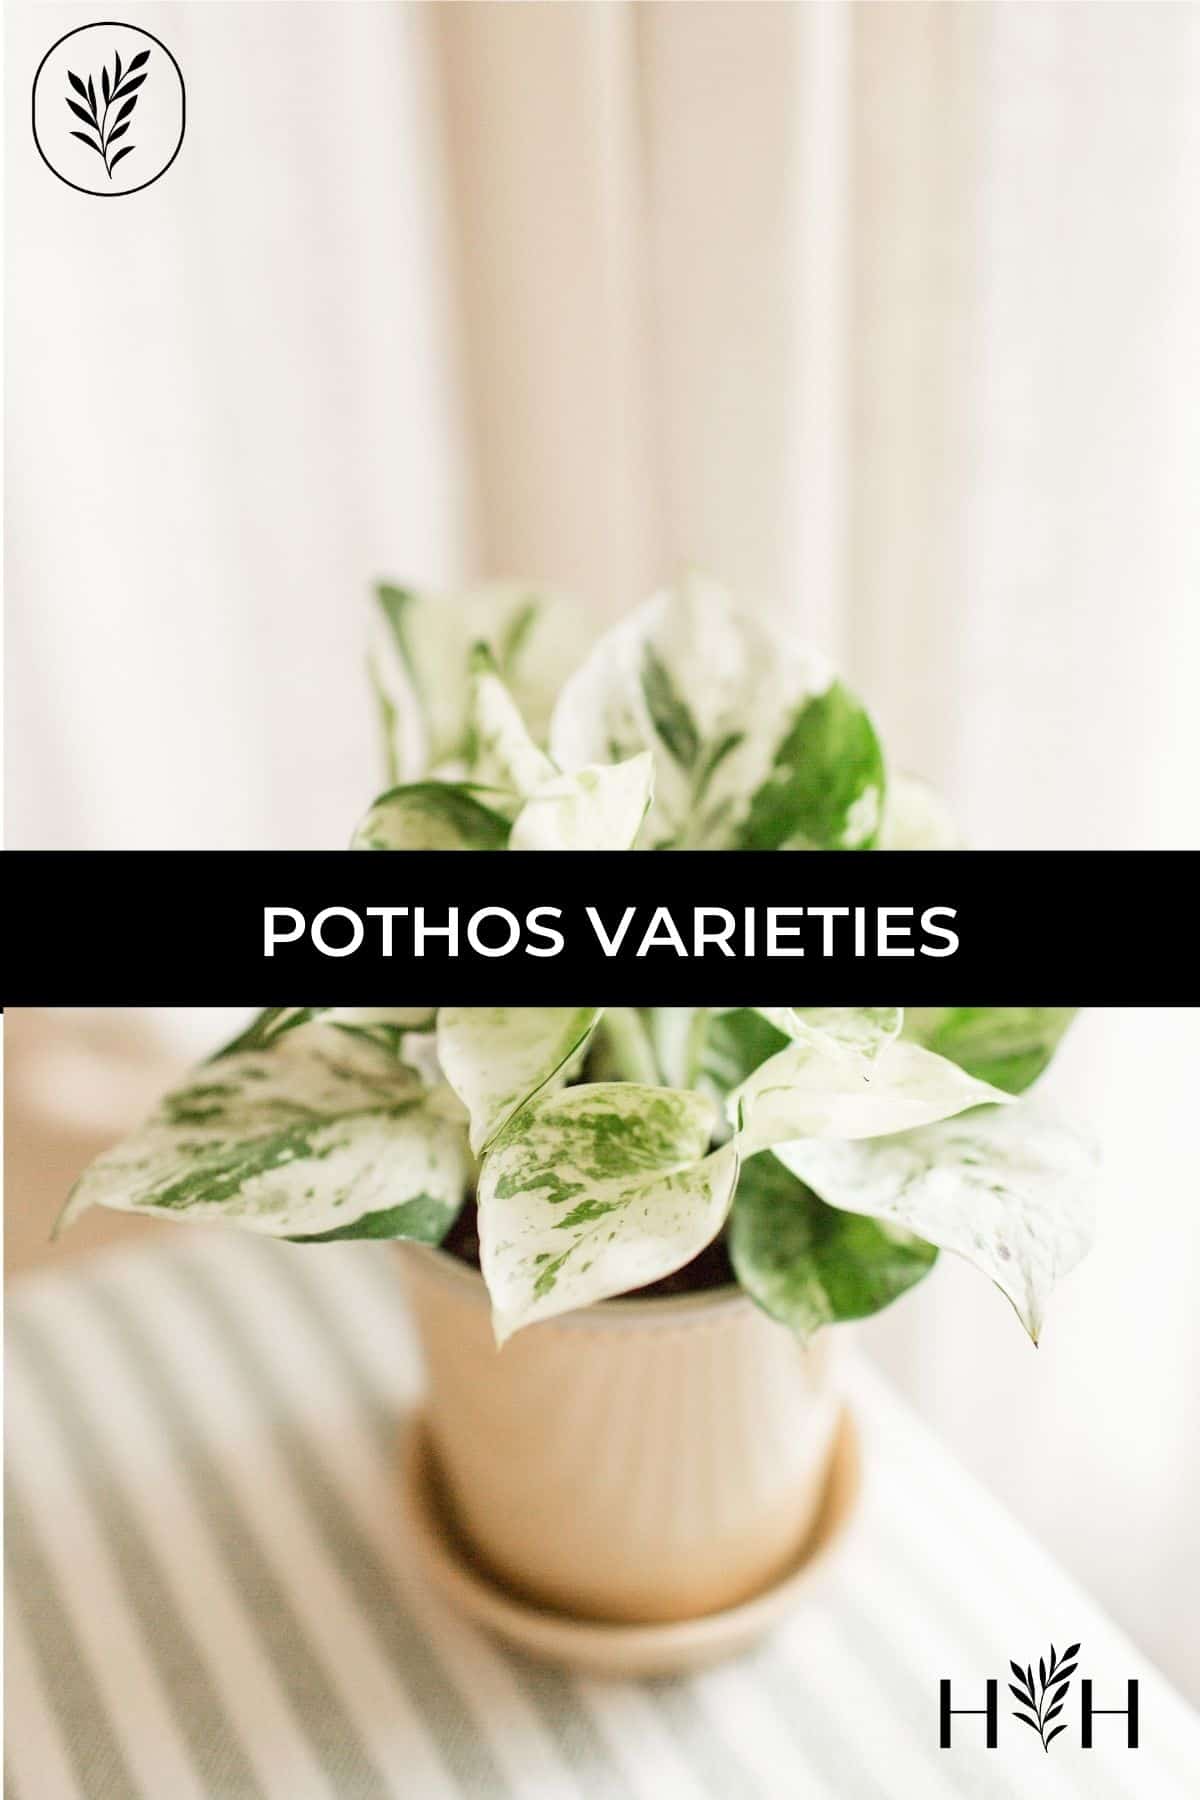 Pothos varieties via @home4theharvest